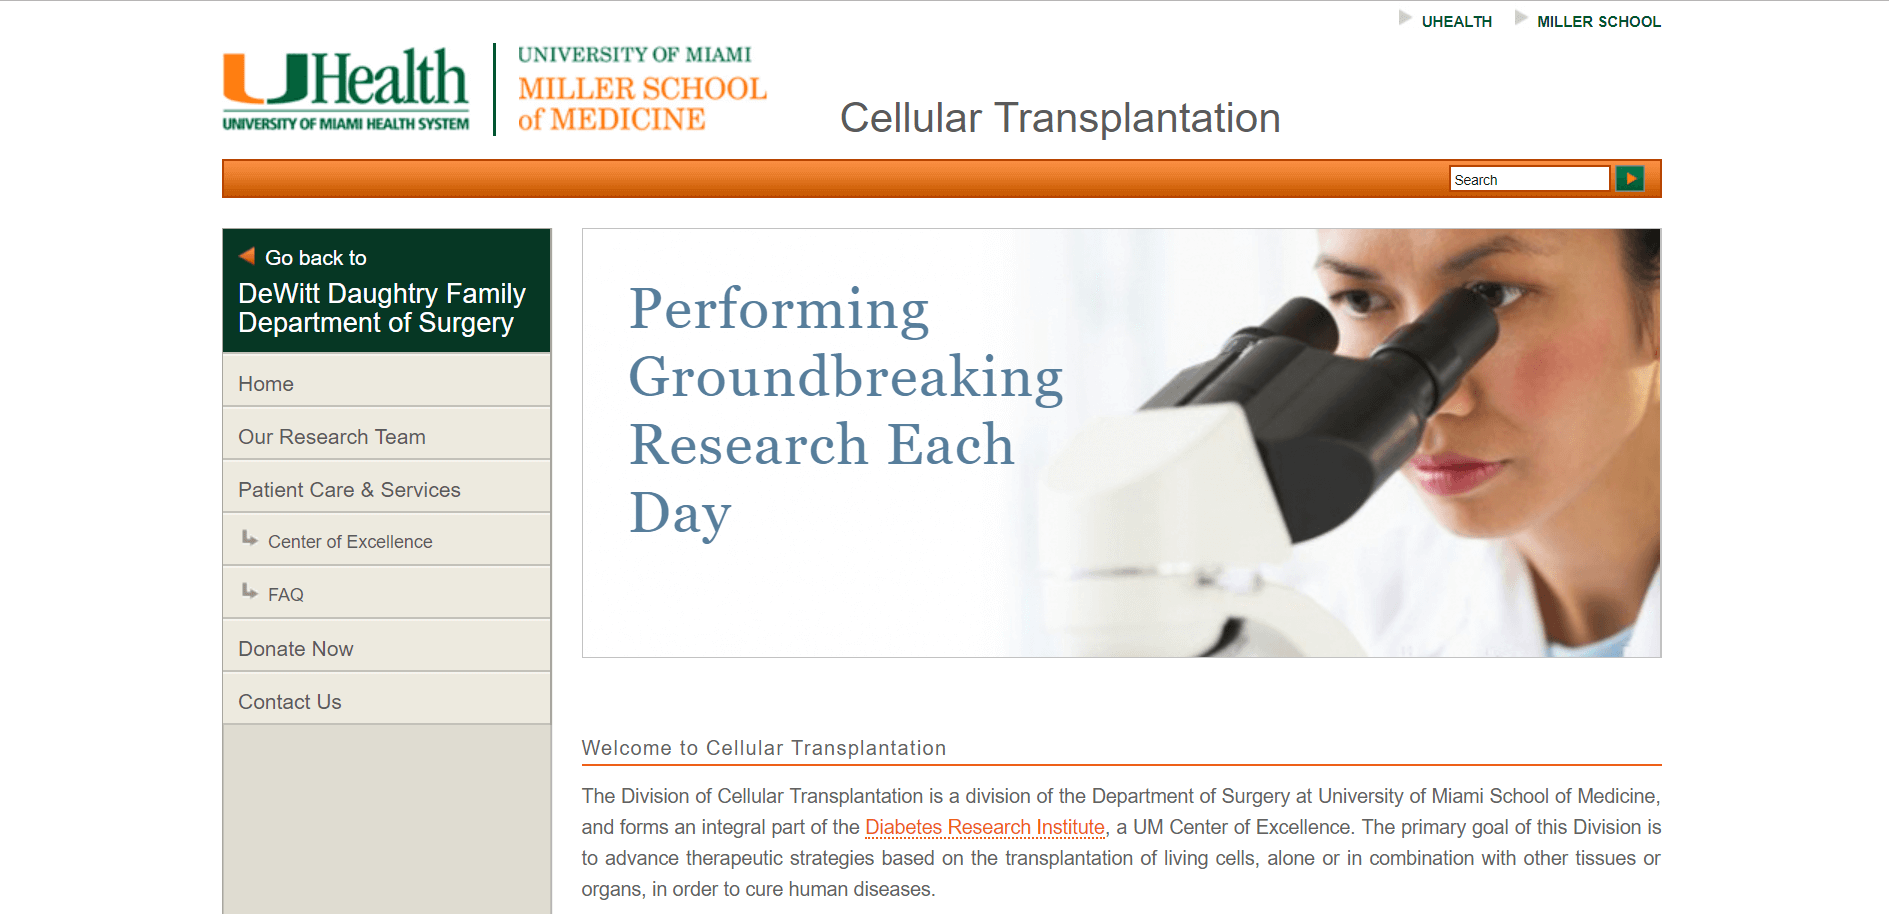 University of Miami Miller School of Medicine, Welcome to Cellular Transplantation